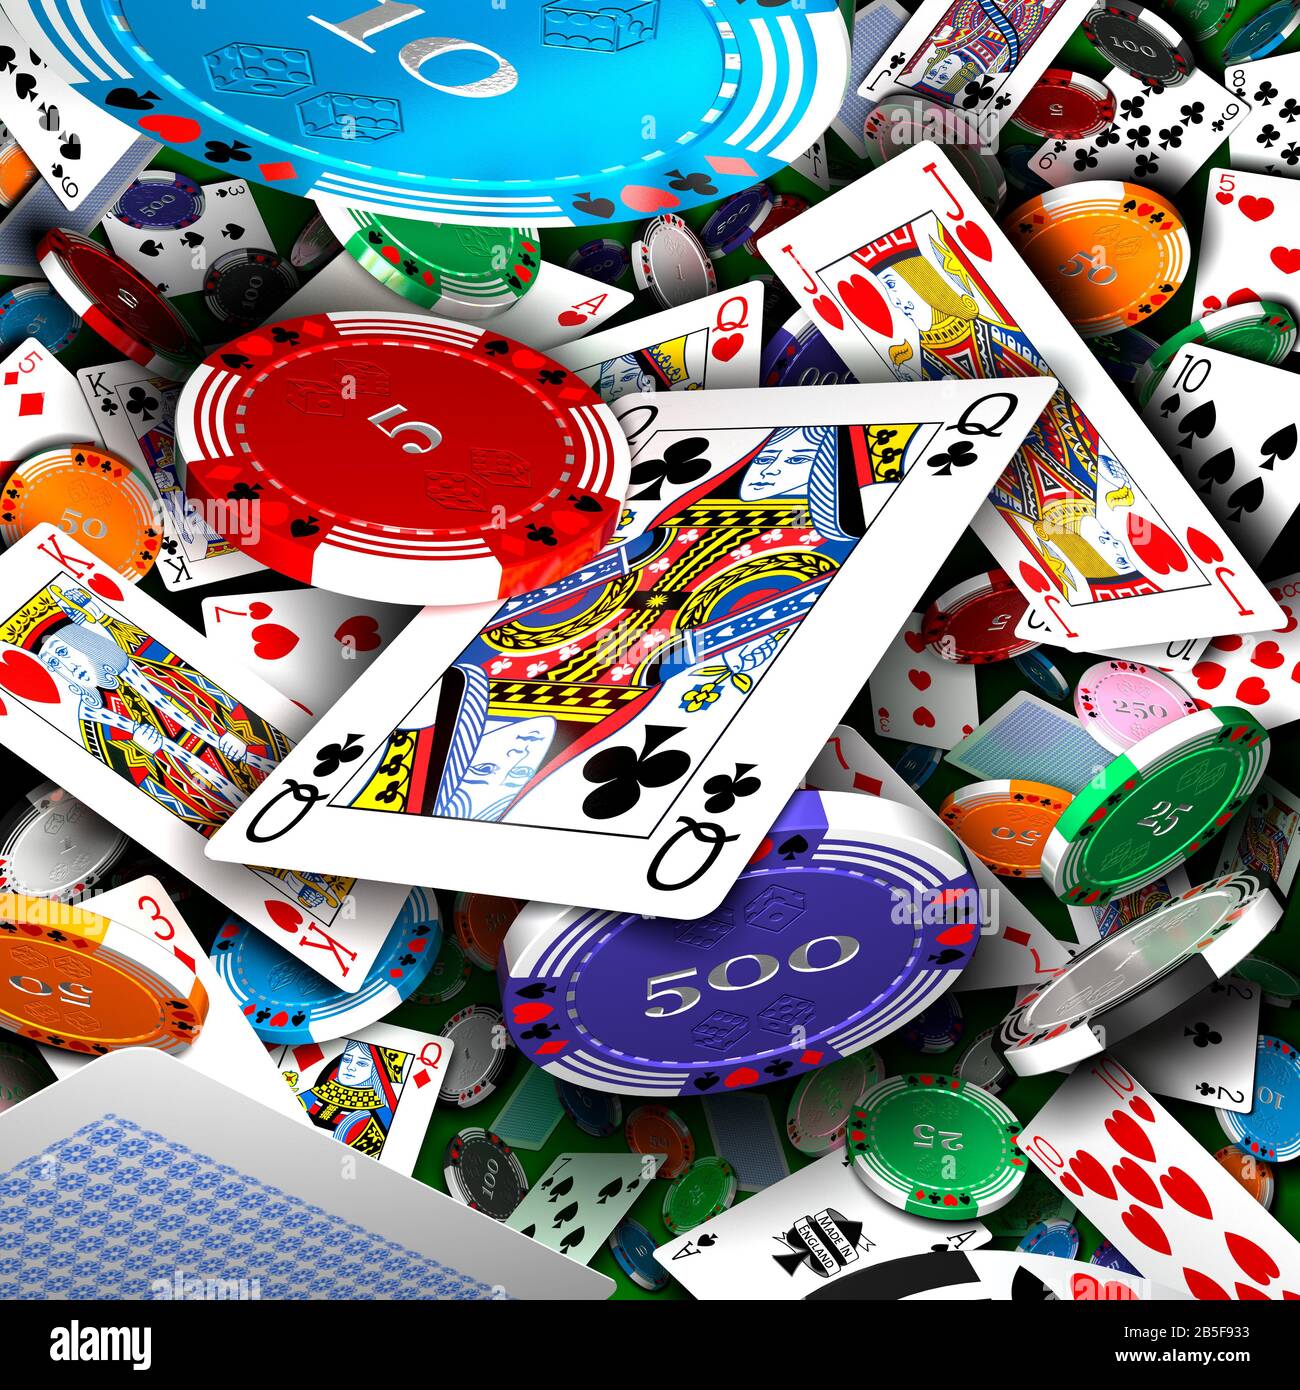 Spielkarte, Karten, Spielchips, Chance, Glück, Casino, fallen. Stockfoto